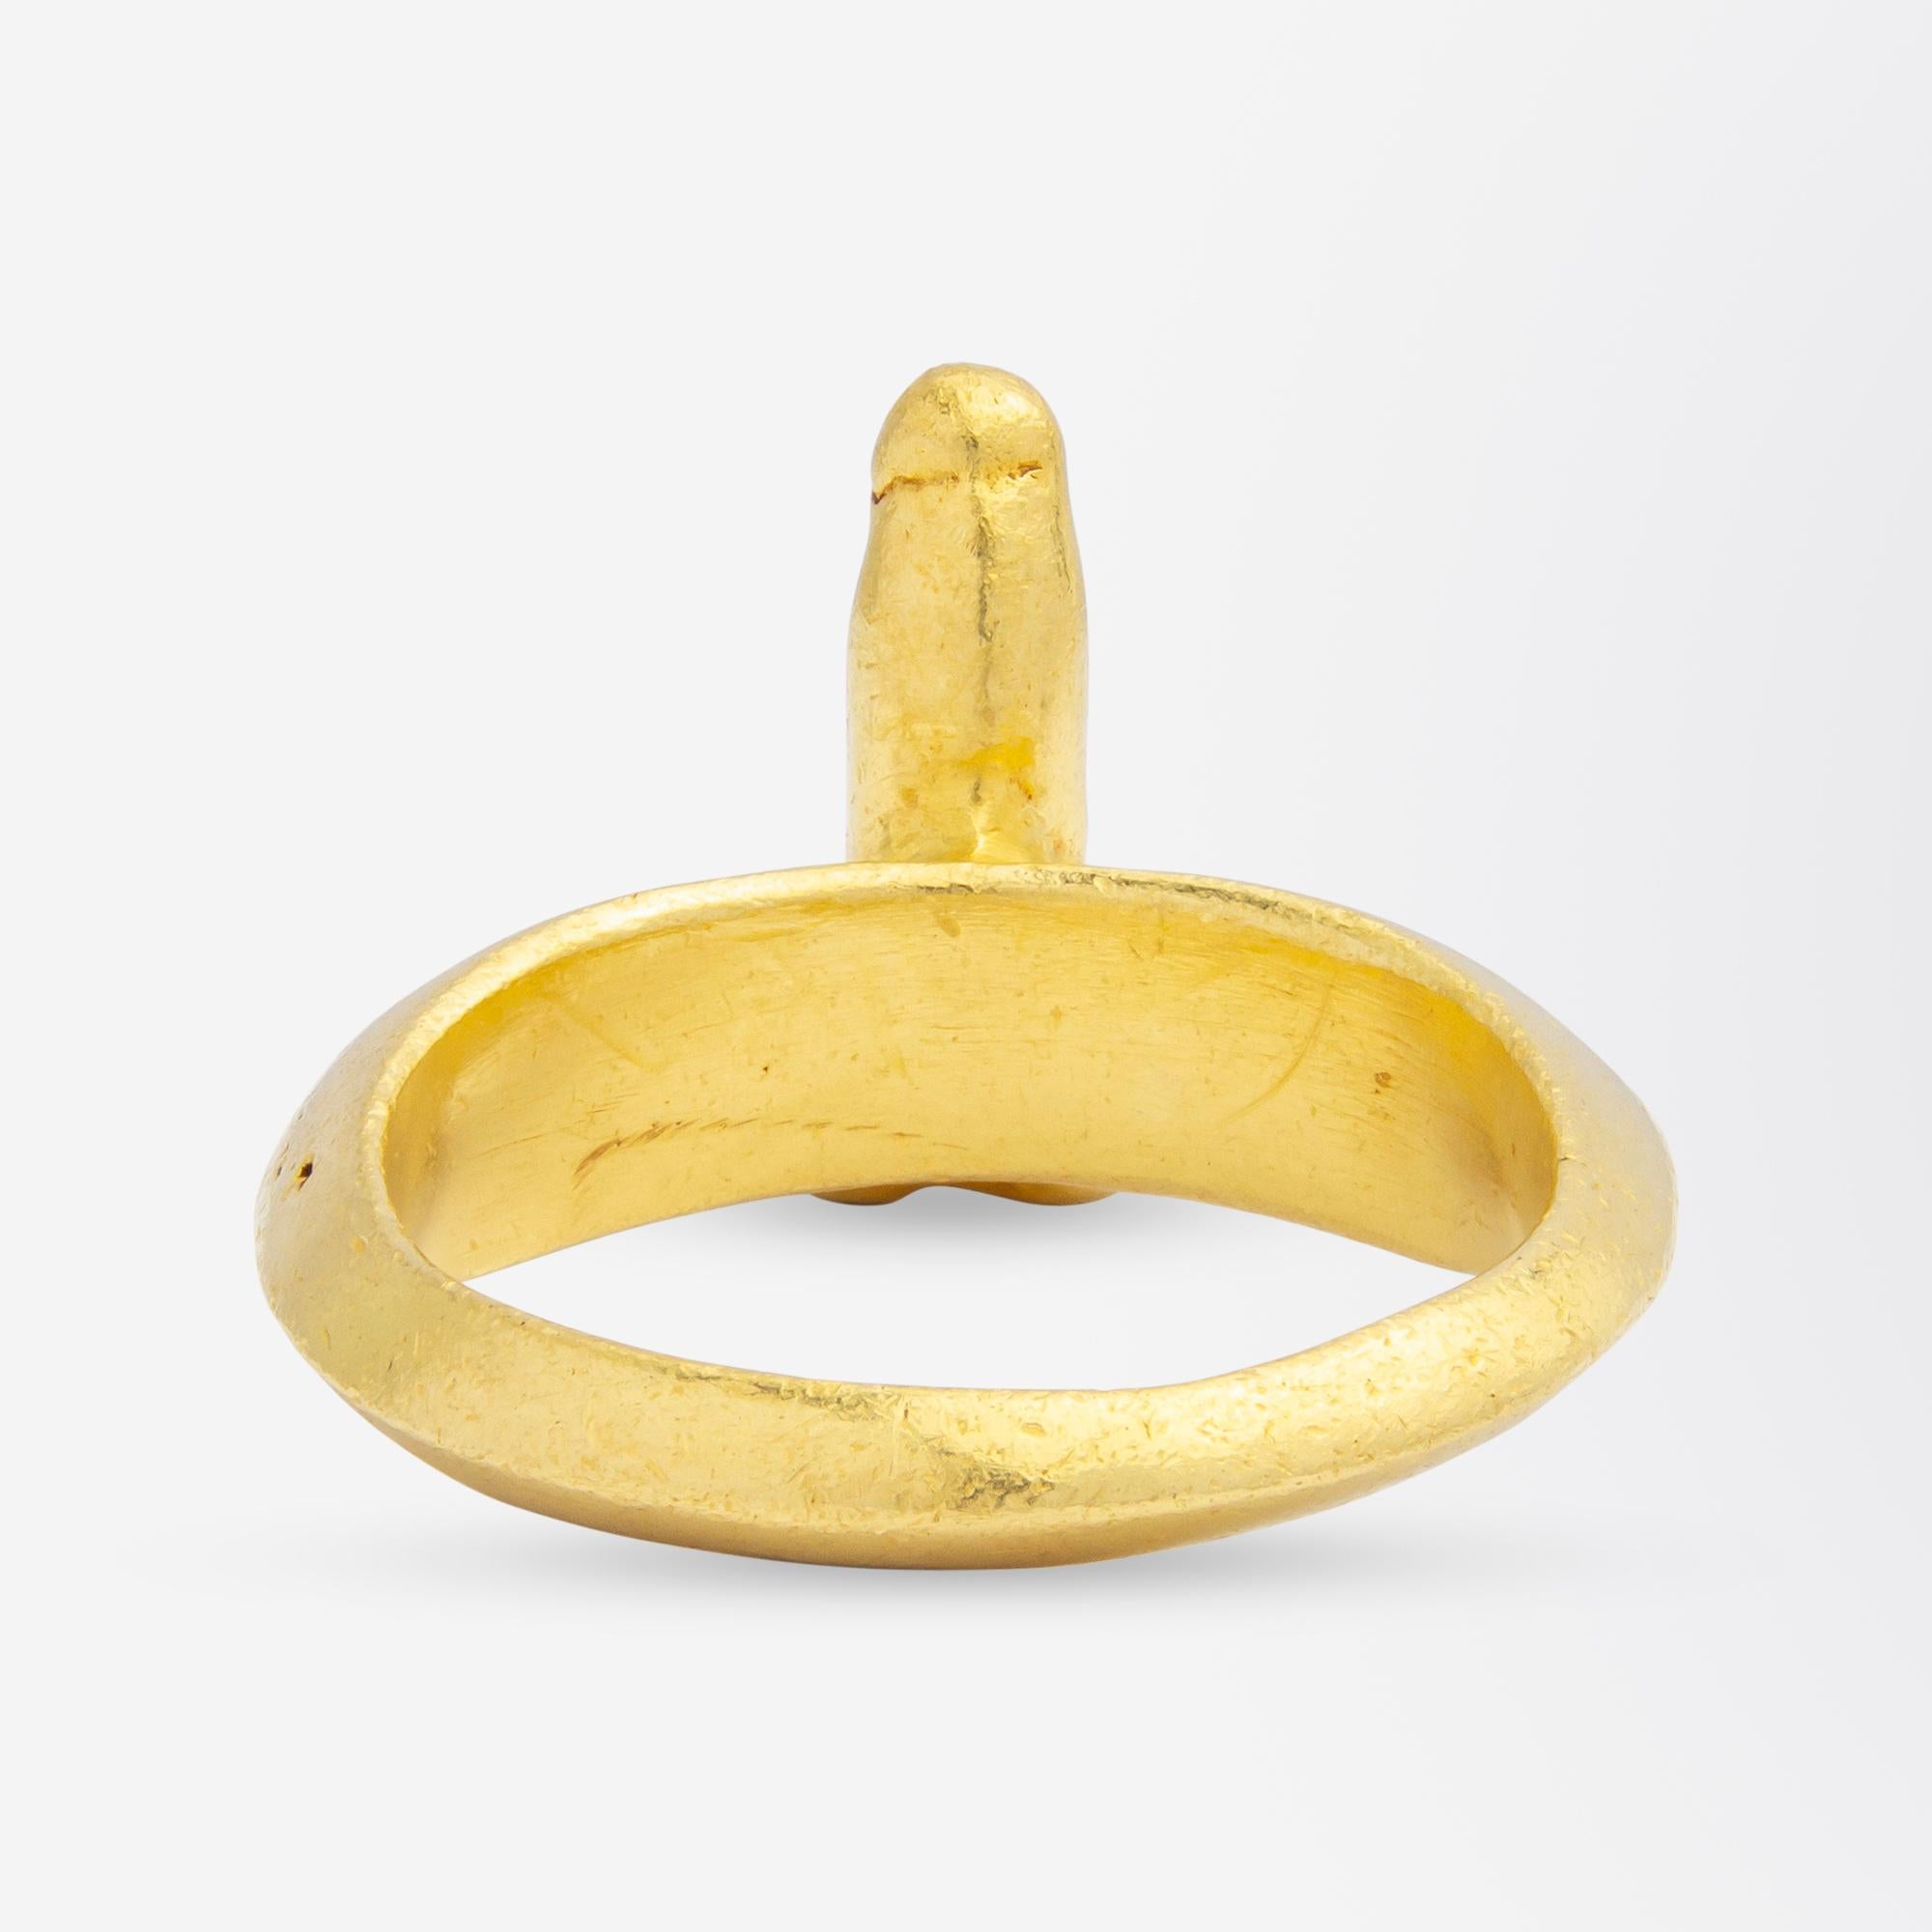 Likely Roman, 22 Karat Yellow Gold Phallus Ring of Antiquity 1